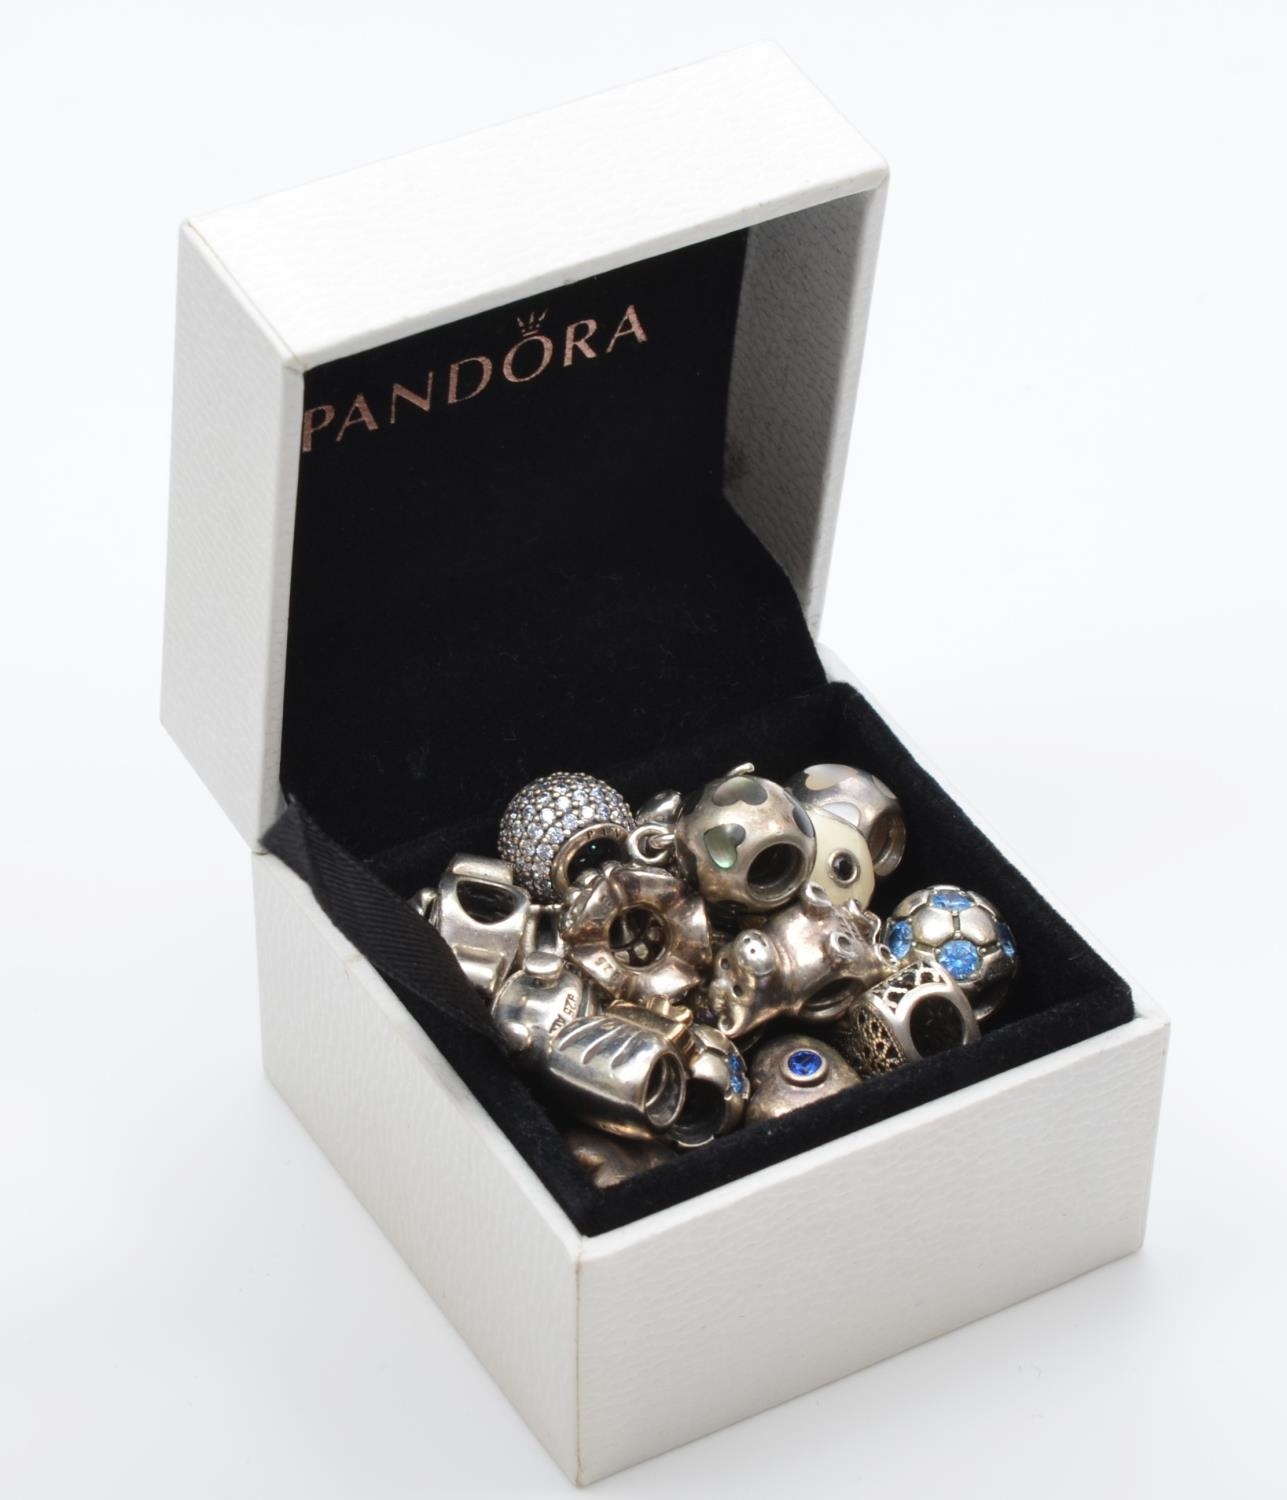 Pandora, twenty various charms, box, 63gm - Image 3 of 3